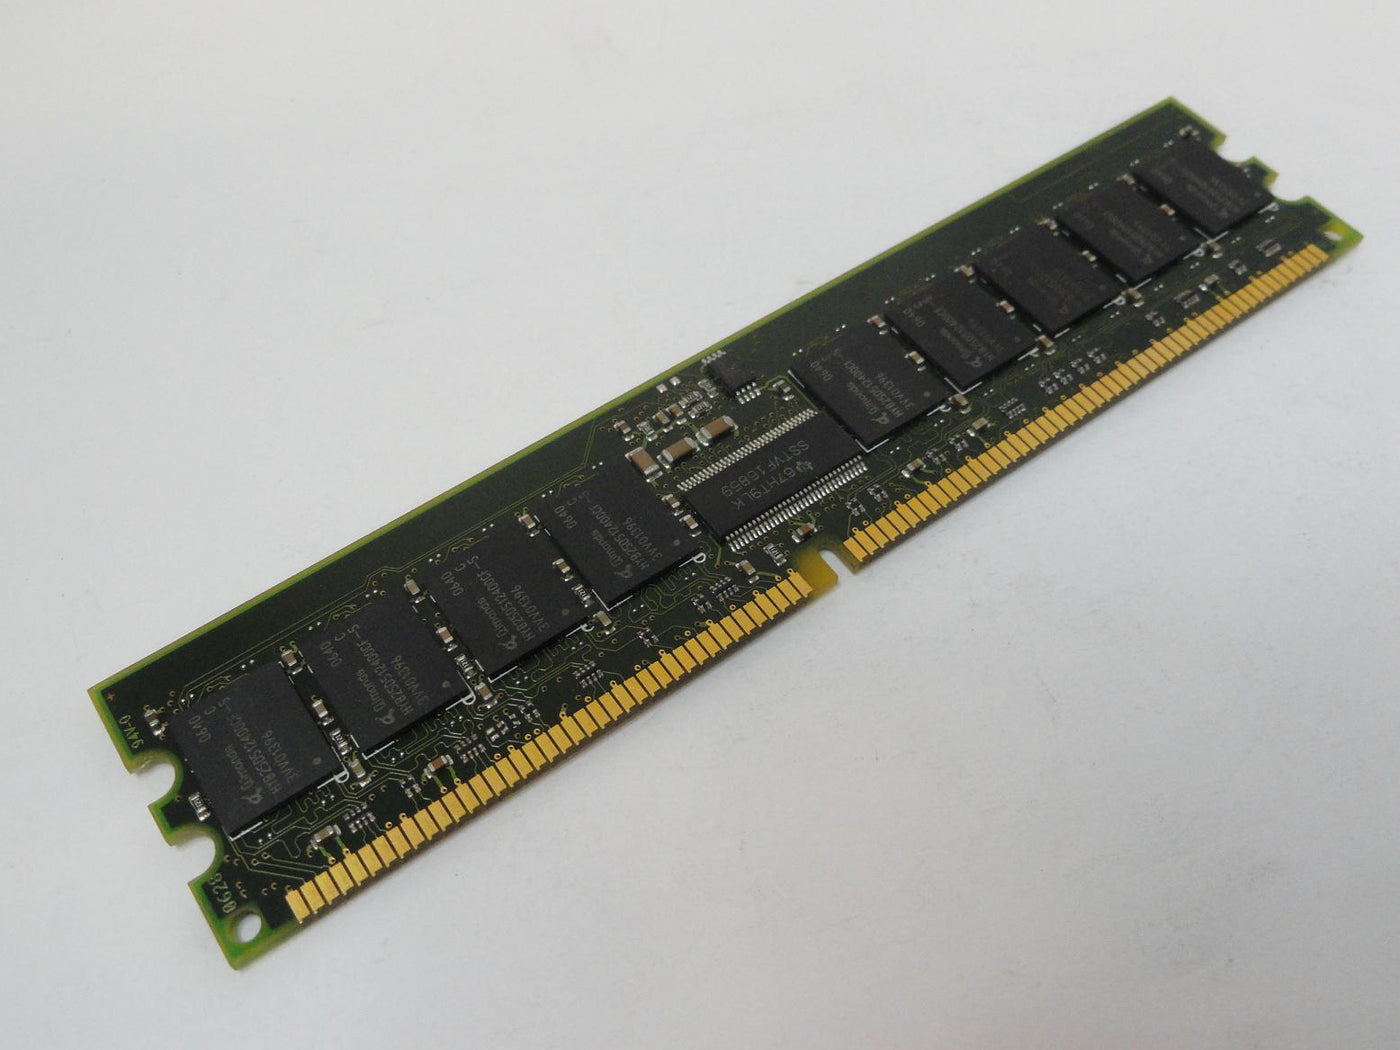 PR25498_PC3200R-30331-C0_Qimonda 1GB PC3200 DDR-400MHz DIMM RAM - Image2